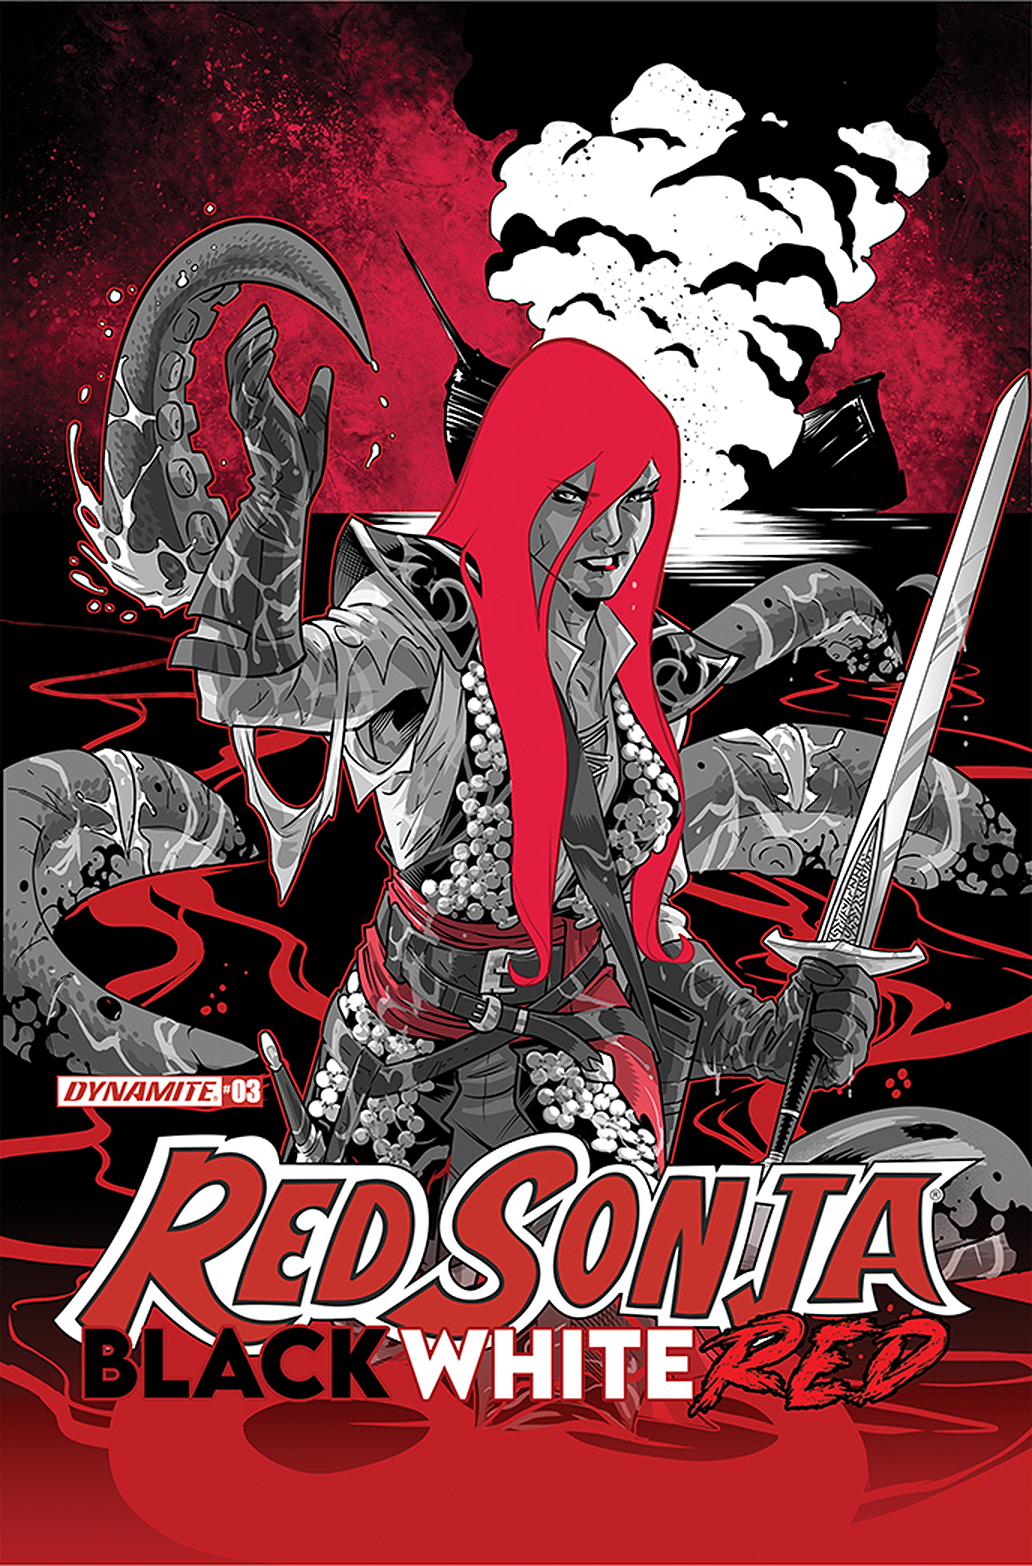 Red Sonja Black White Red #3 Cover B Izaakse